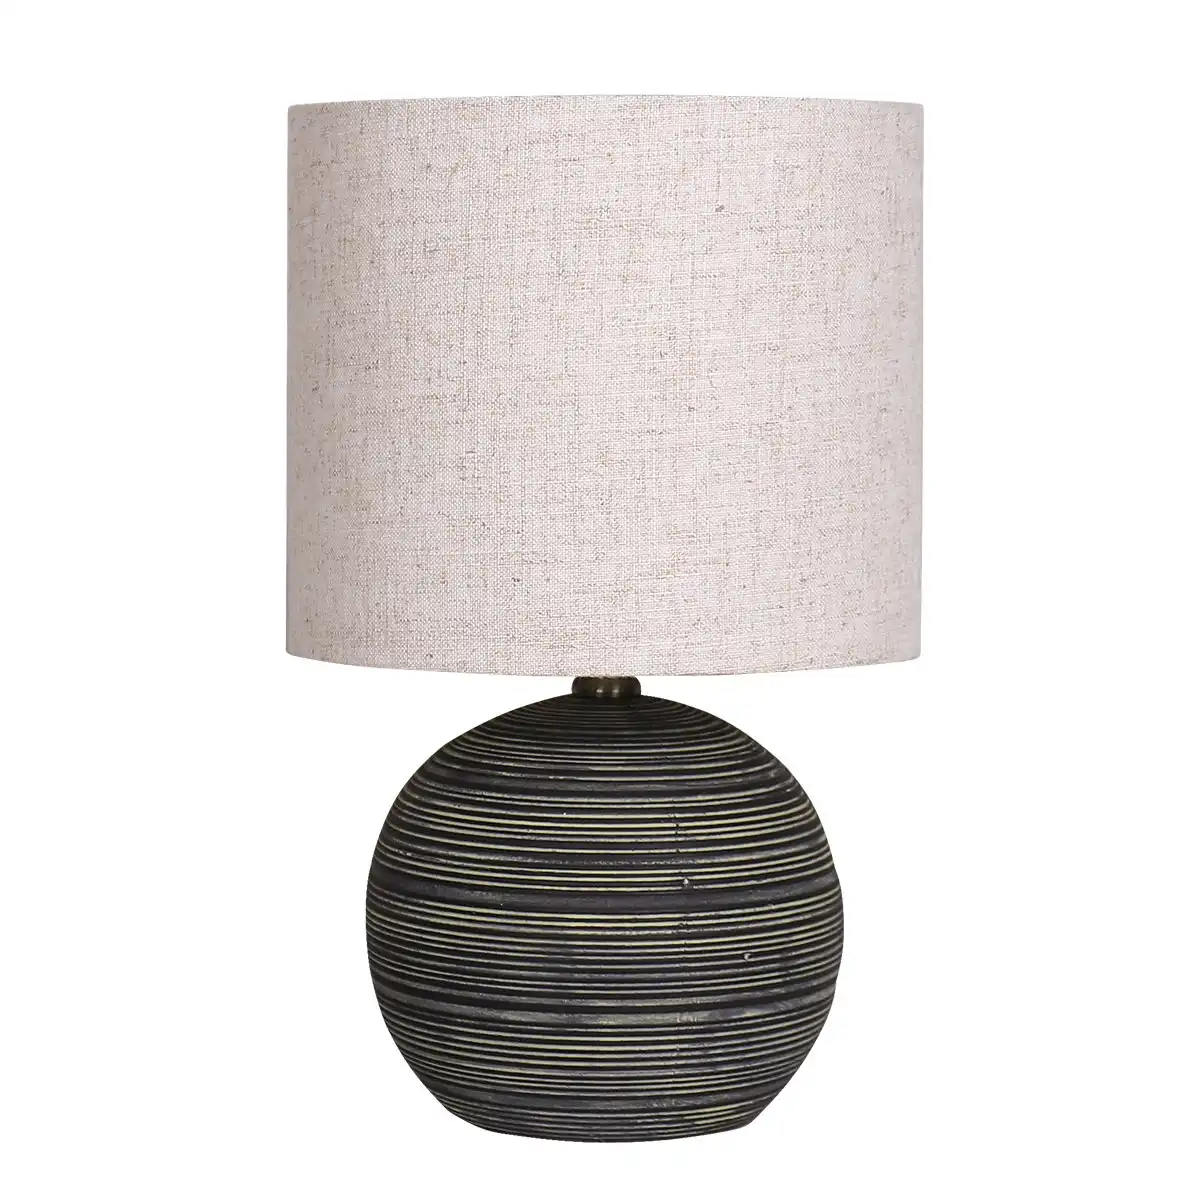 Sarantino Ceramic Table Lamp with Striped Pattern